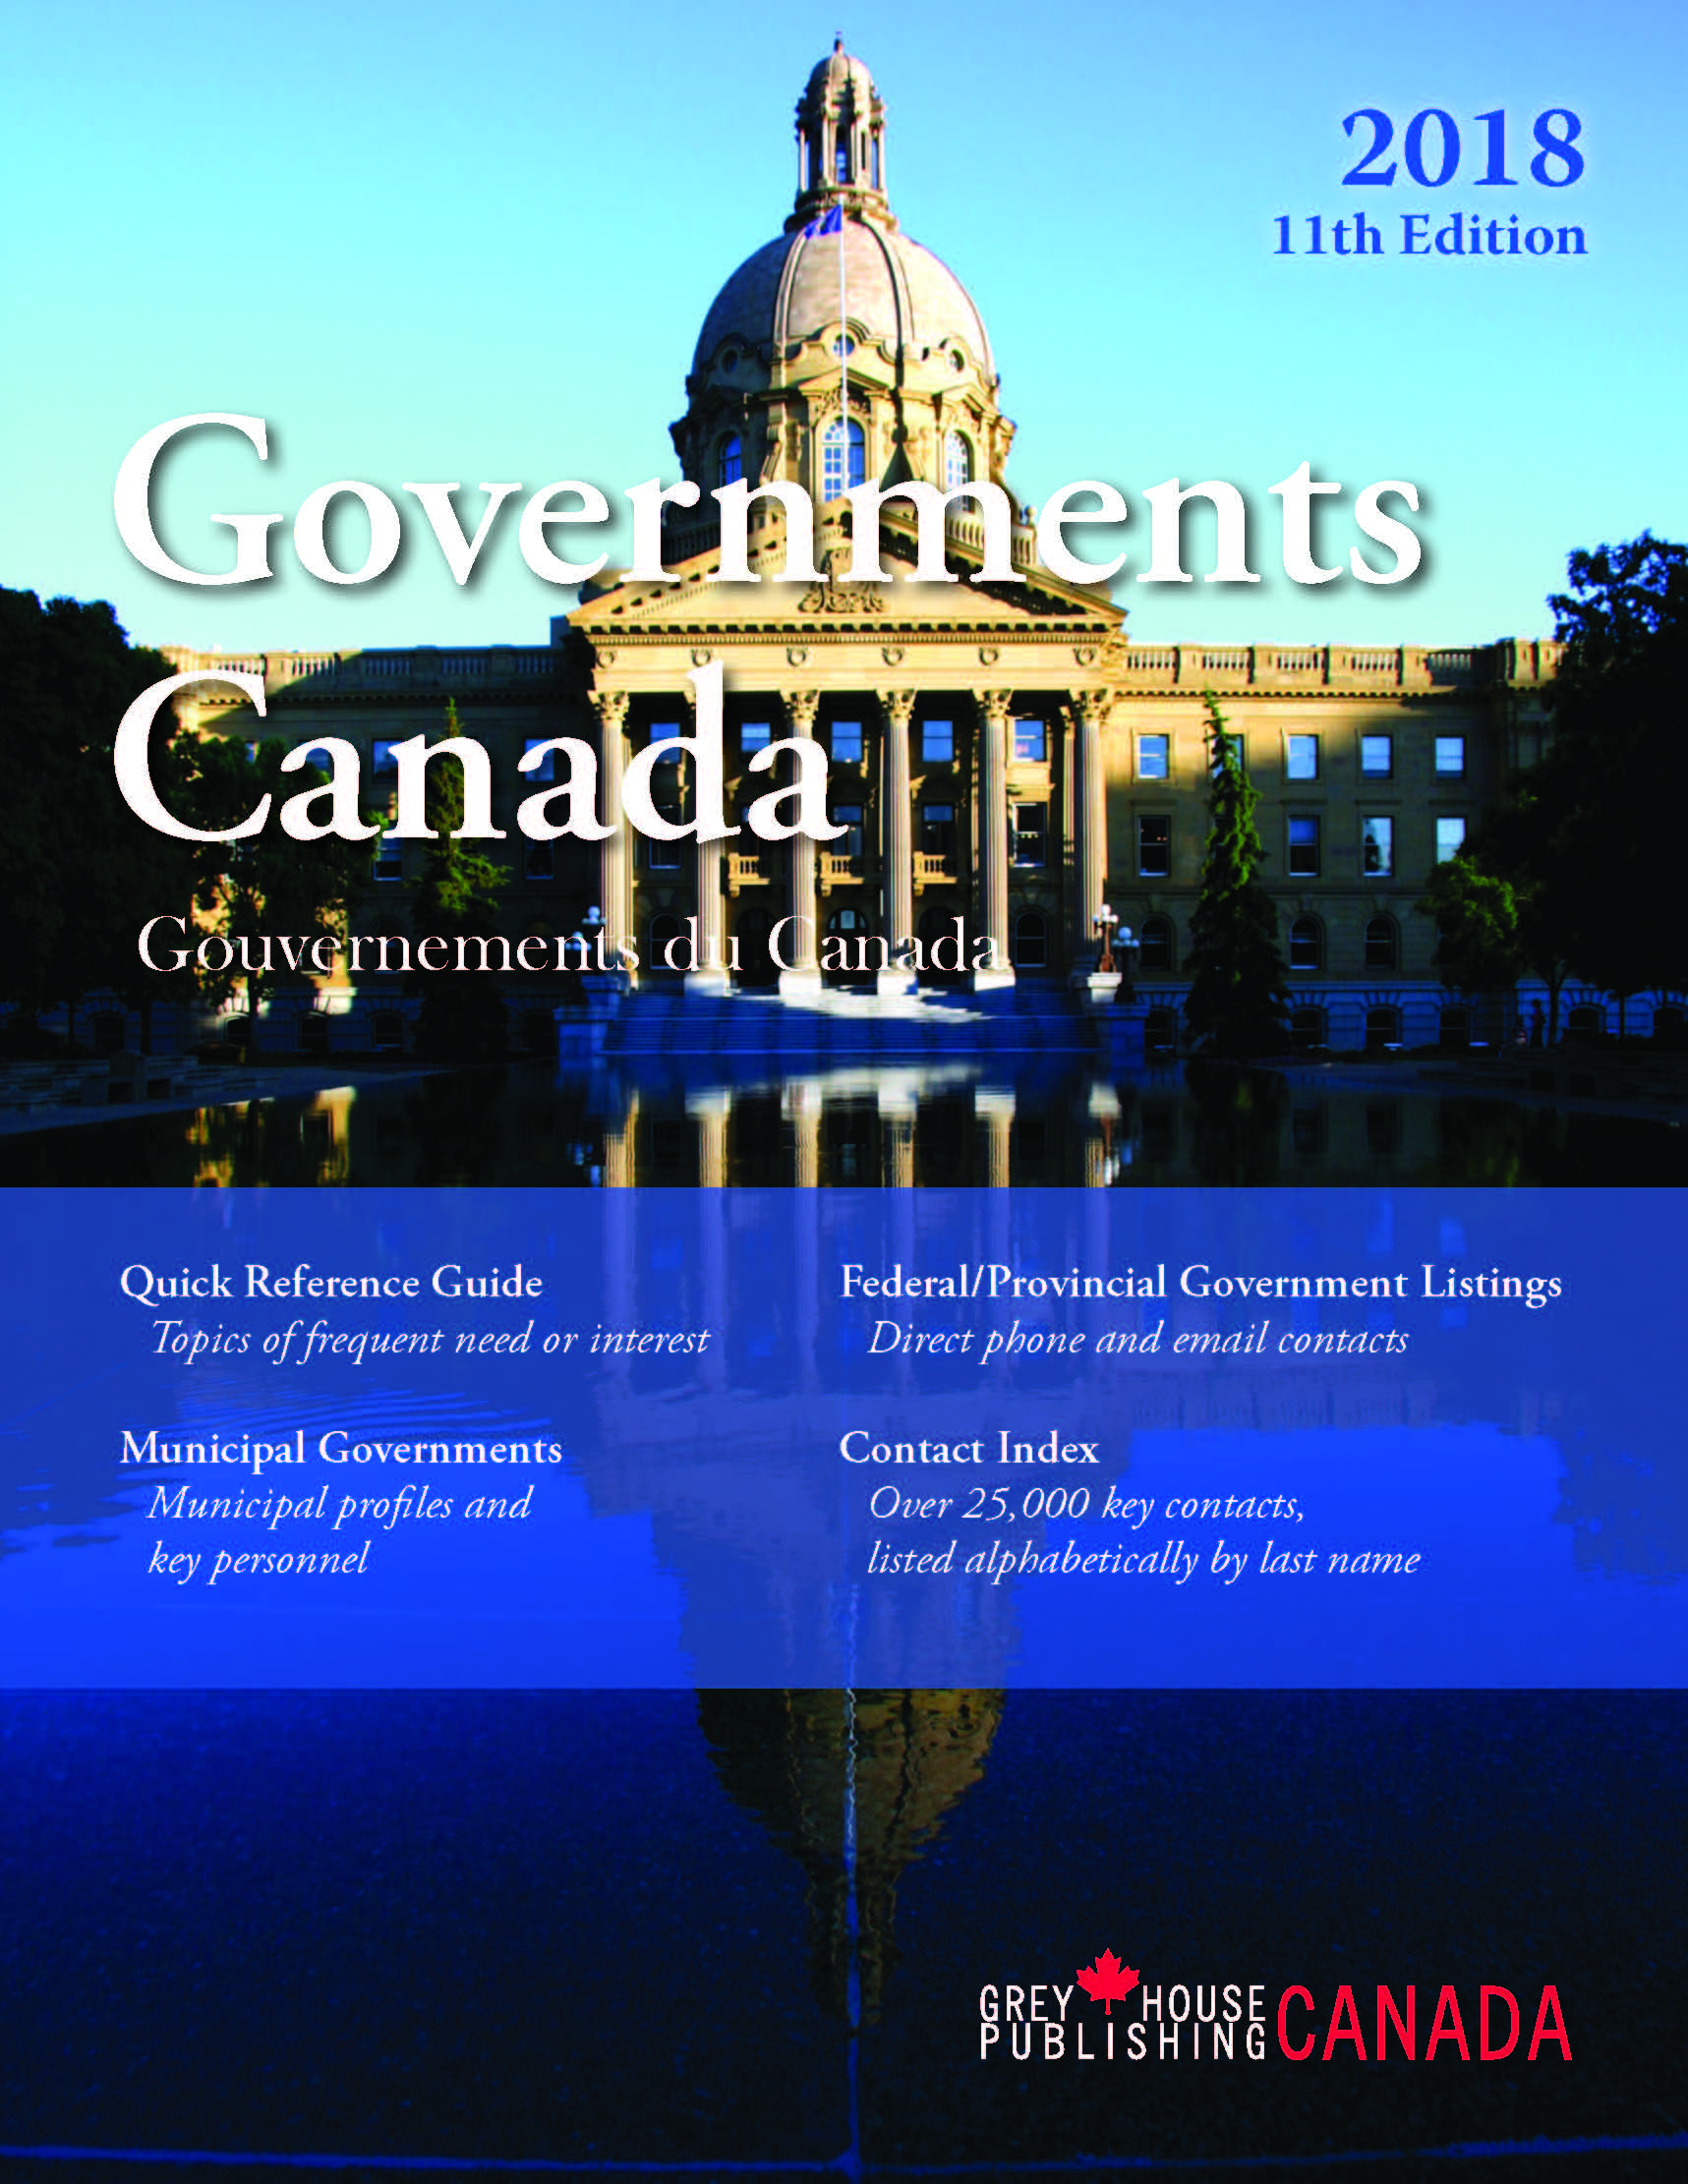 Governments Canada